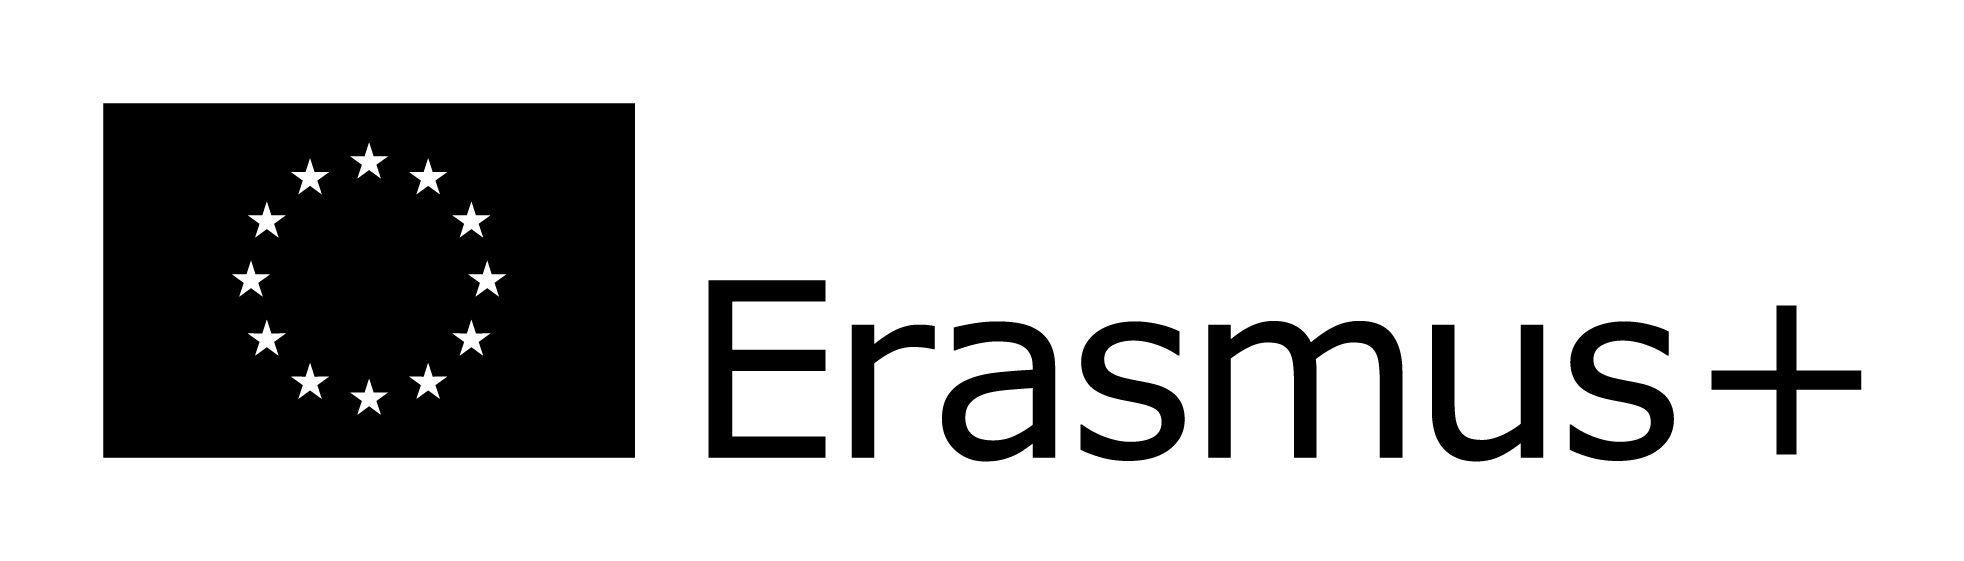 Black and White Evaluation Logo - Promotion and dissemination. Erasmus+